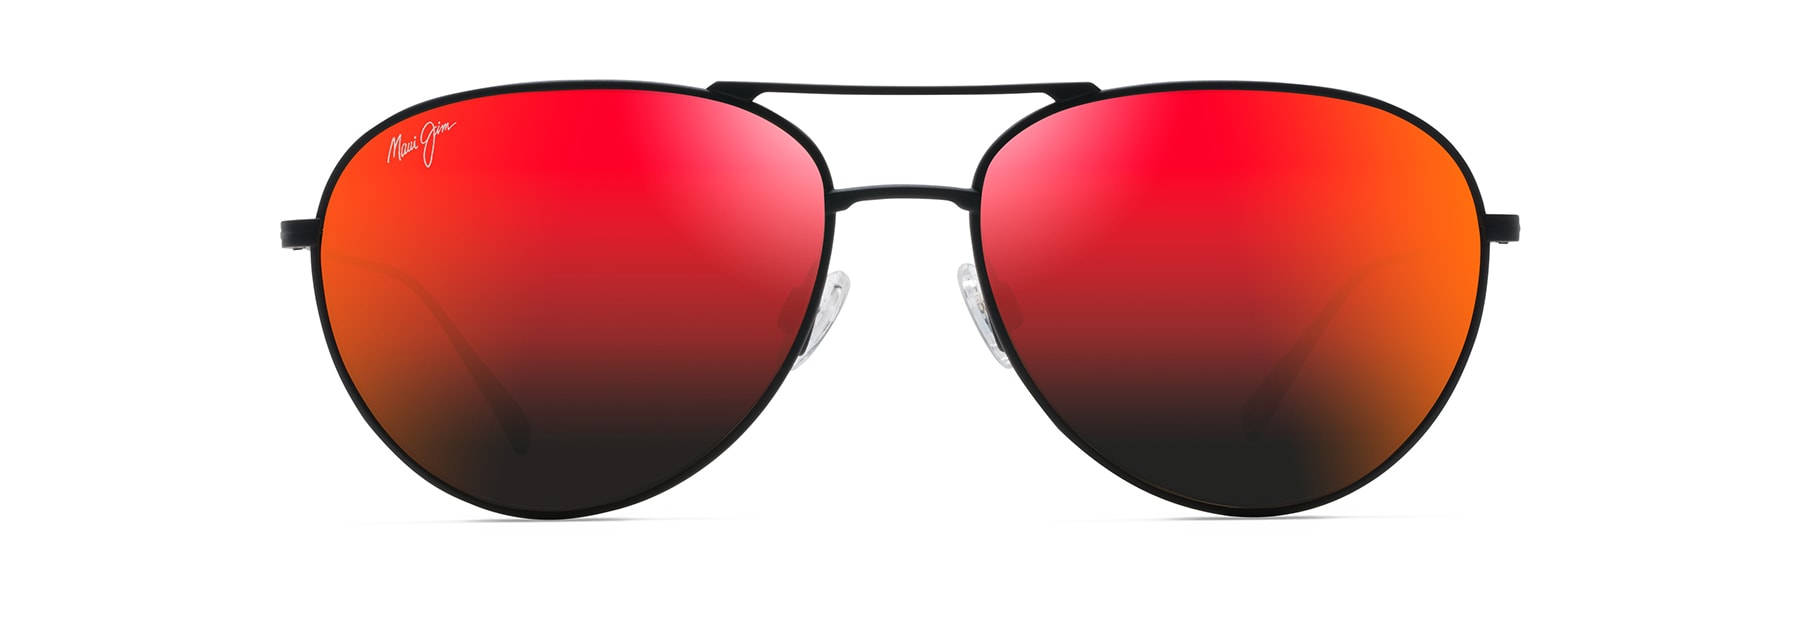 WALAKA Aviators Sunglasses